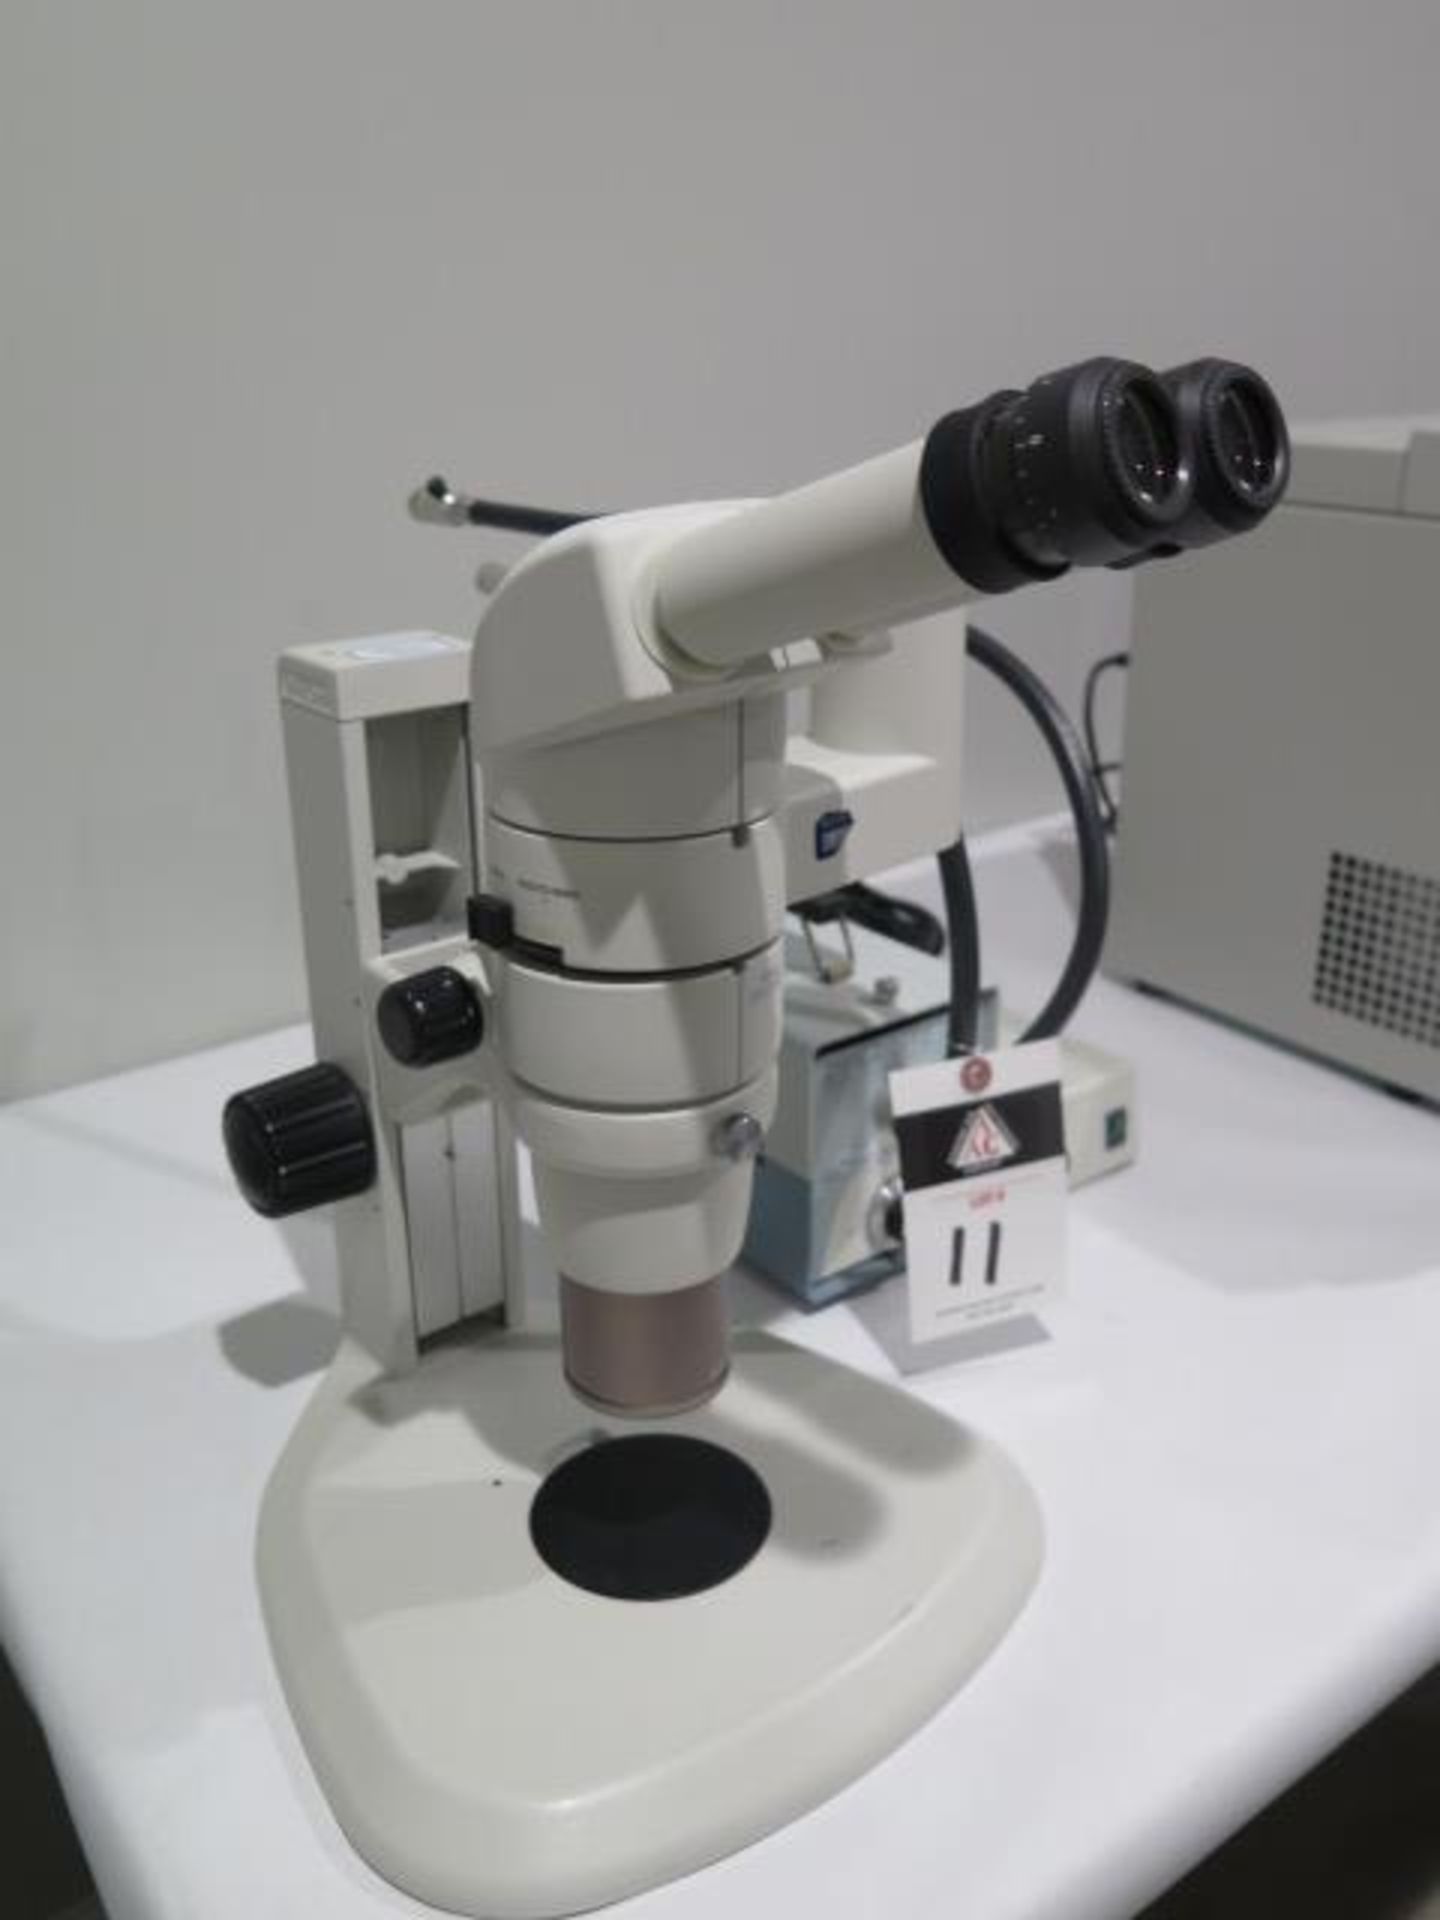 Nikon SMZ800 Monocular Microscope w/ Phototube Video Splitter Port (NO CAMERA), SOLD AS IS - Image 2 of 10